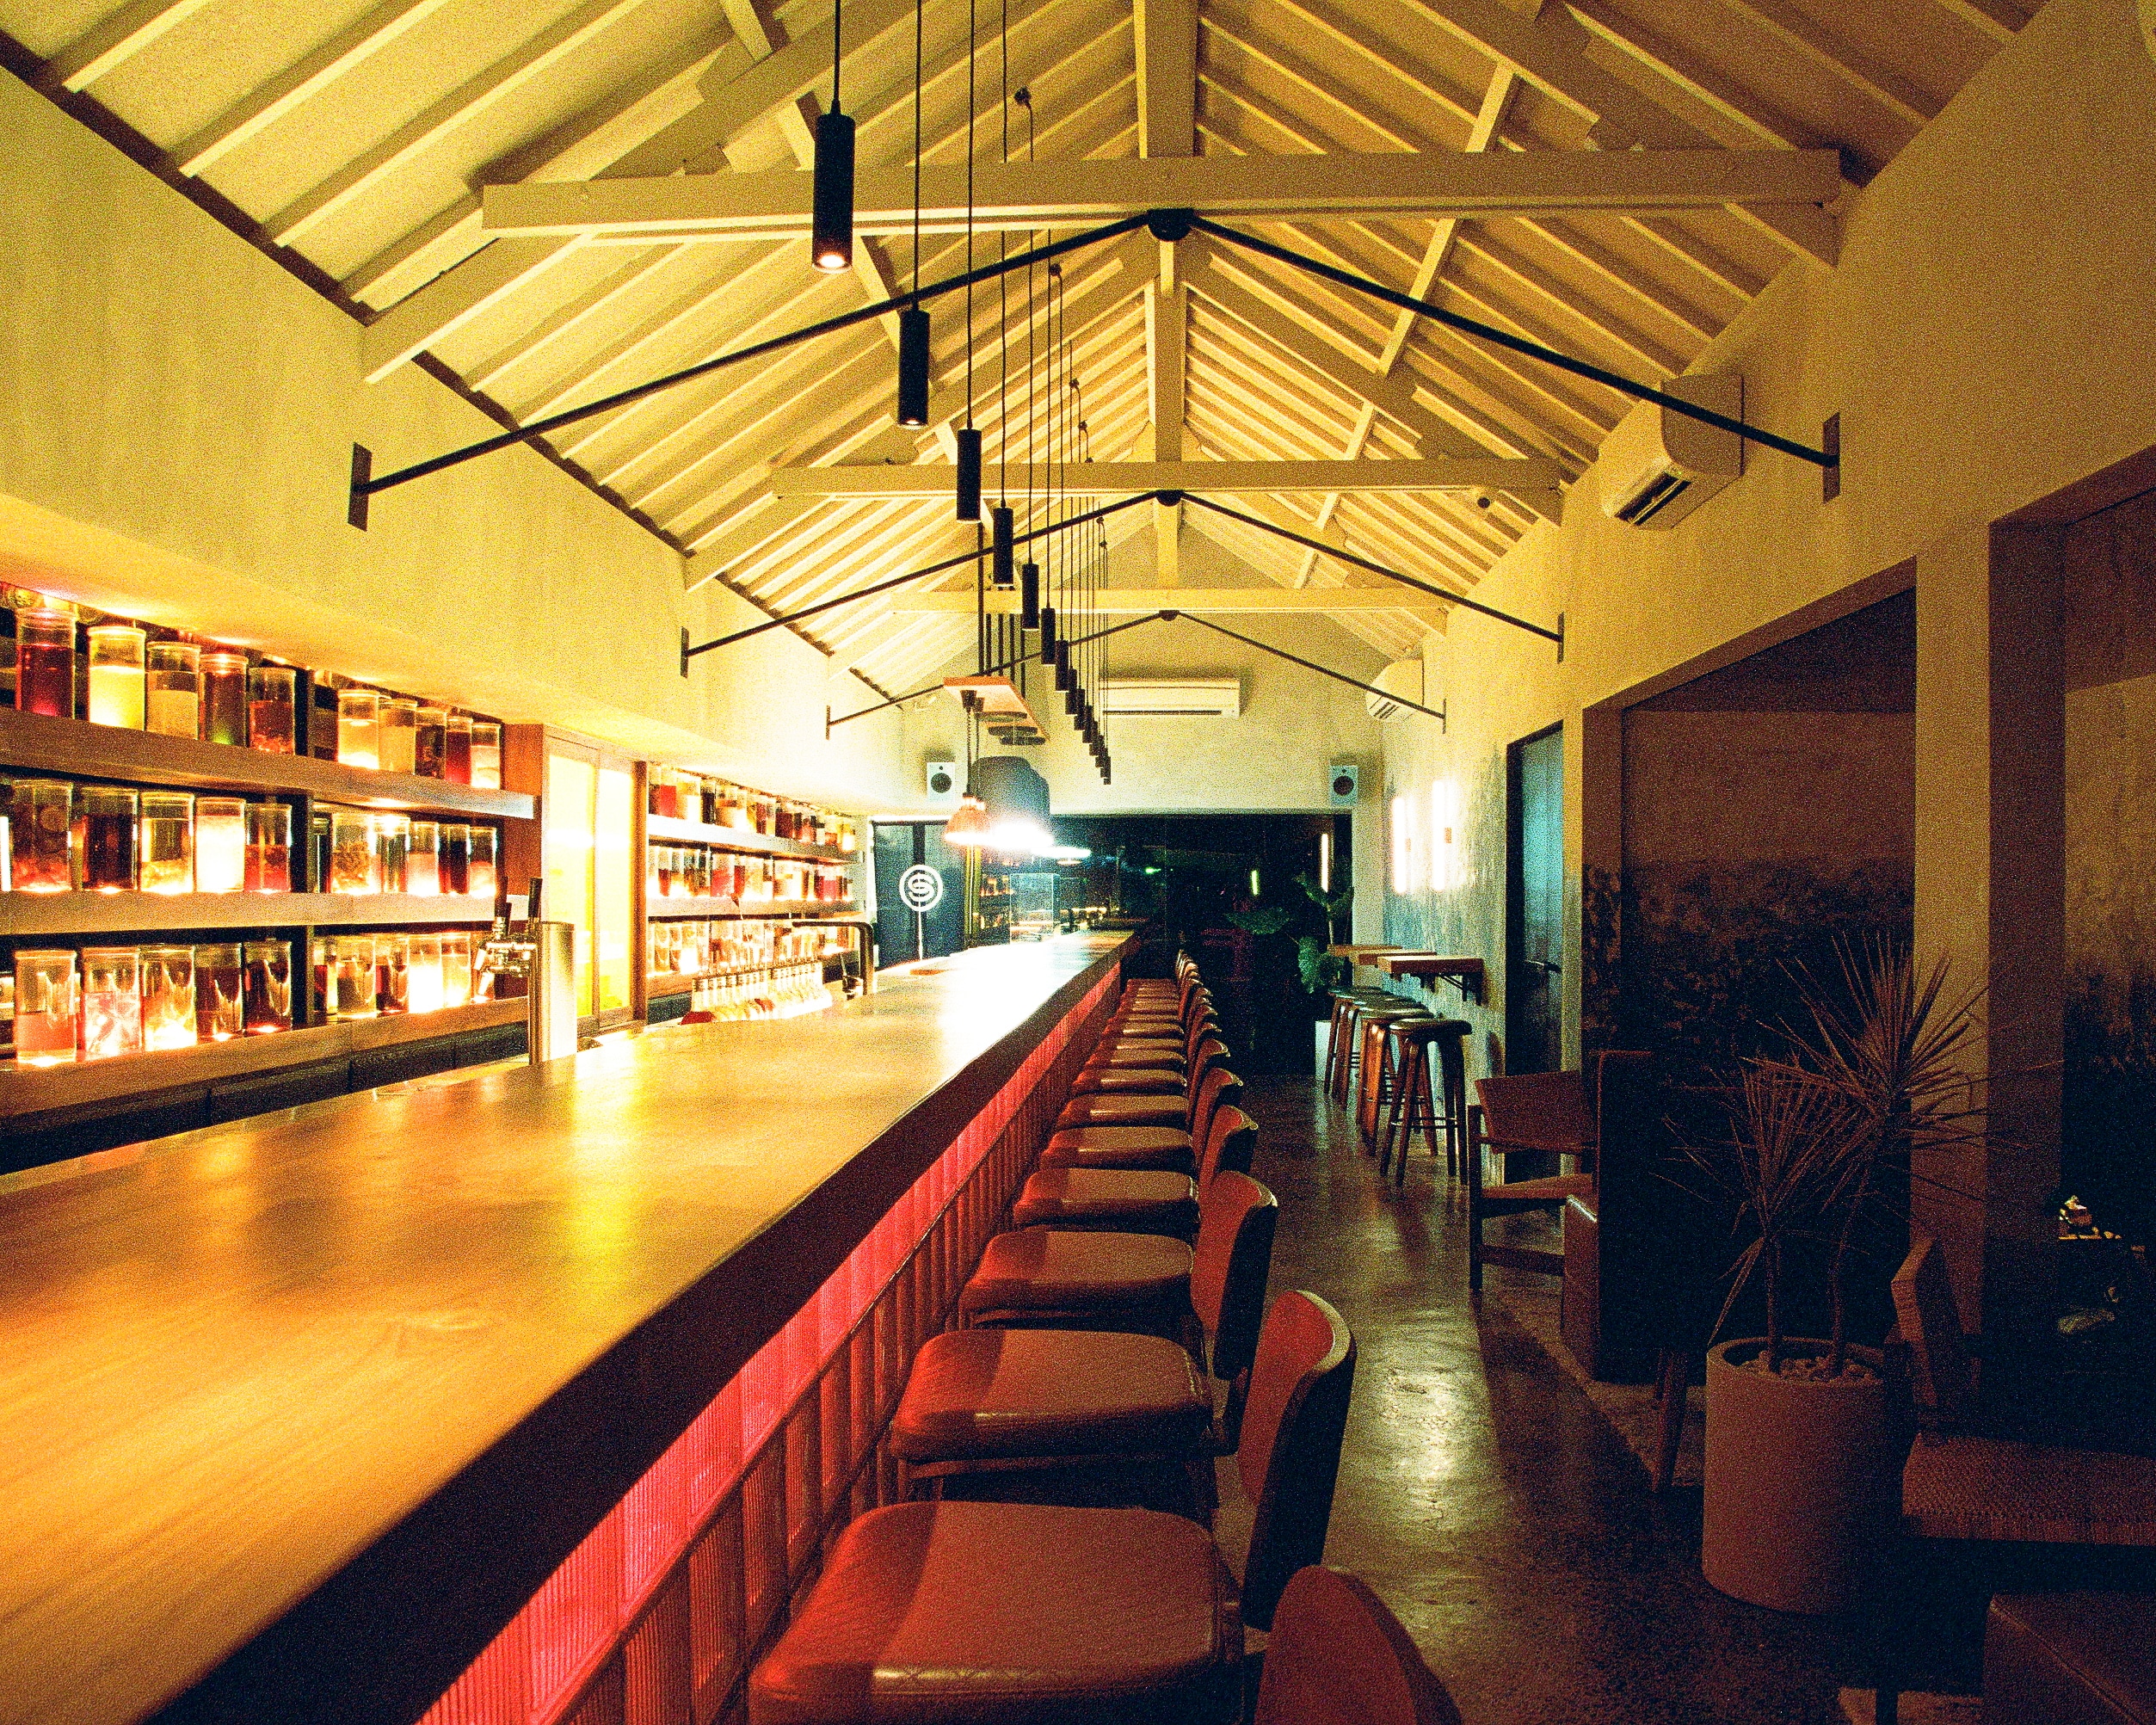 Design Assembly - Club Soda - Bar in Bali - Interior Design - Bar Interior - Bali Architect - Lounge Area